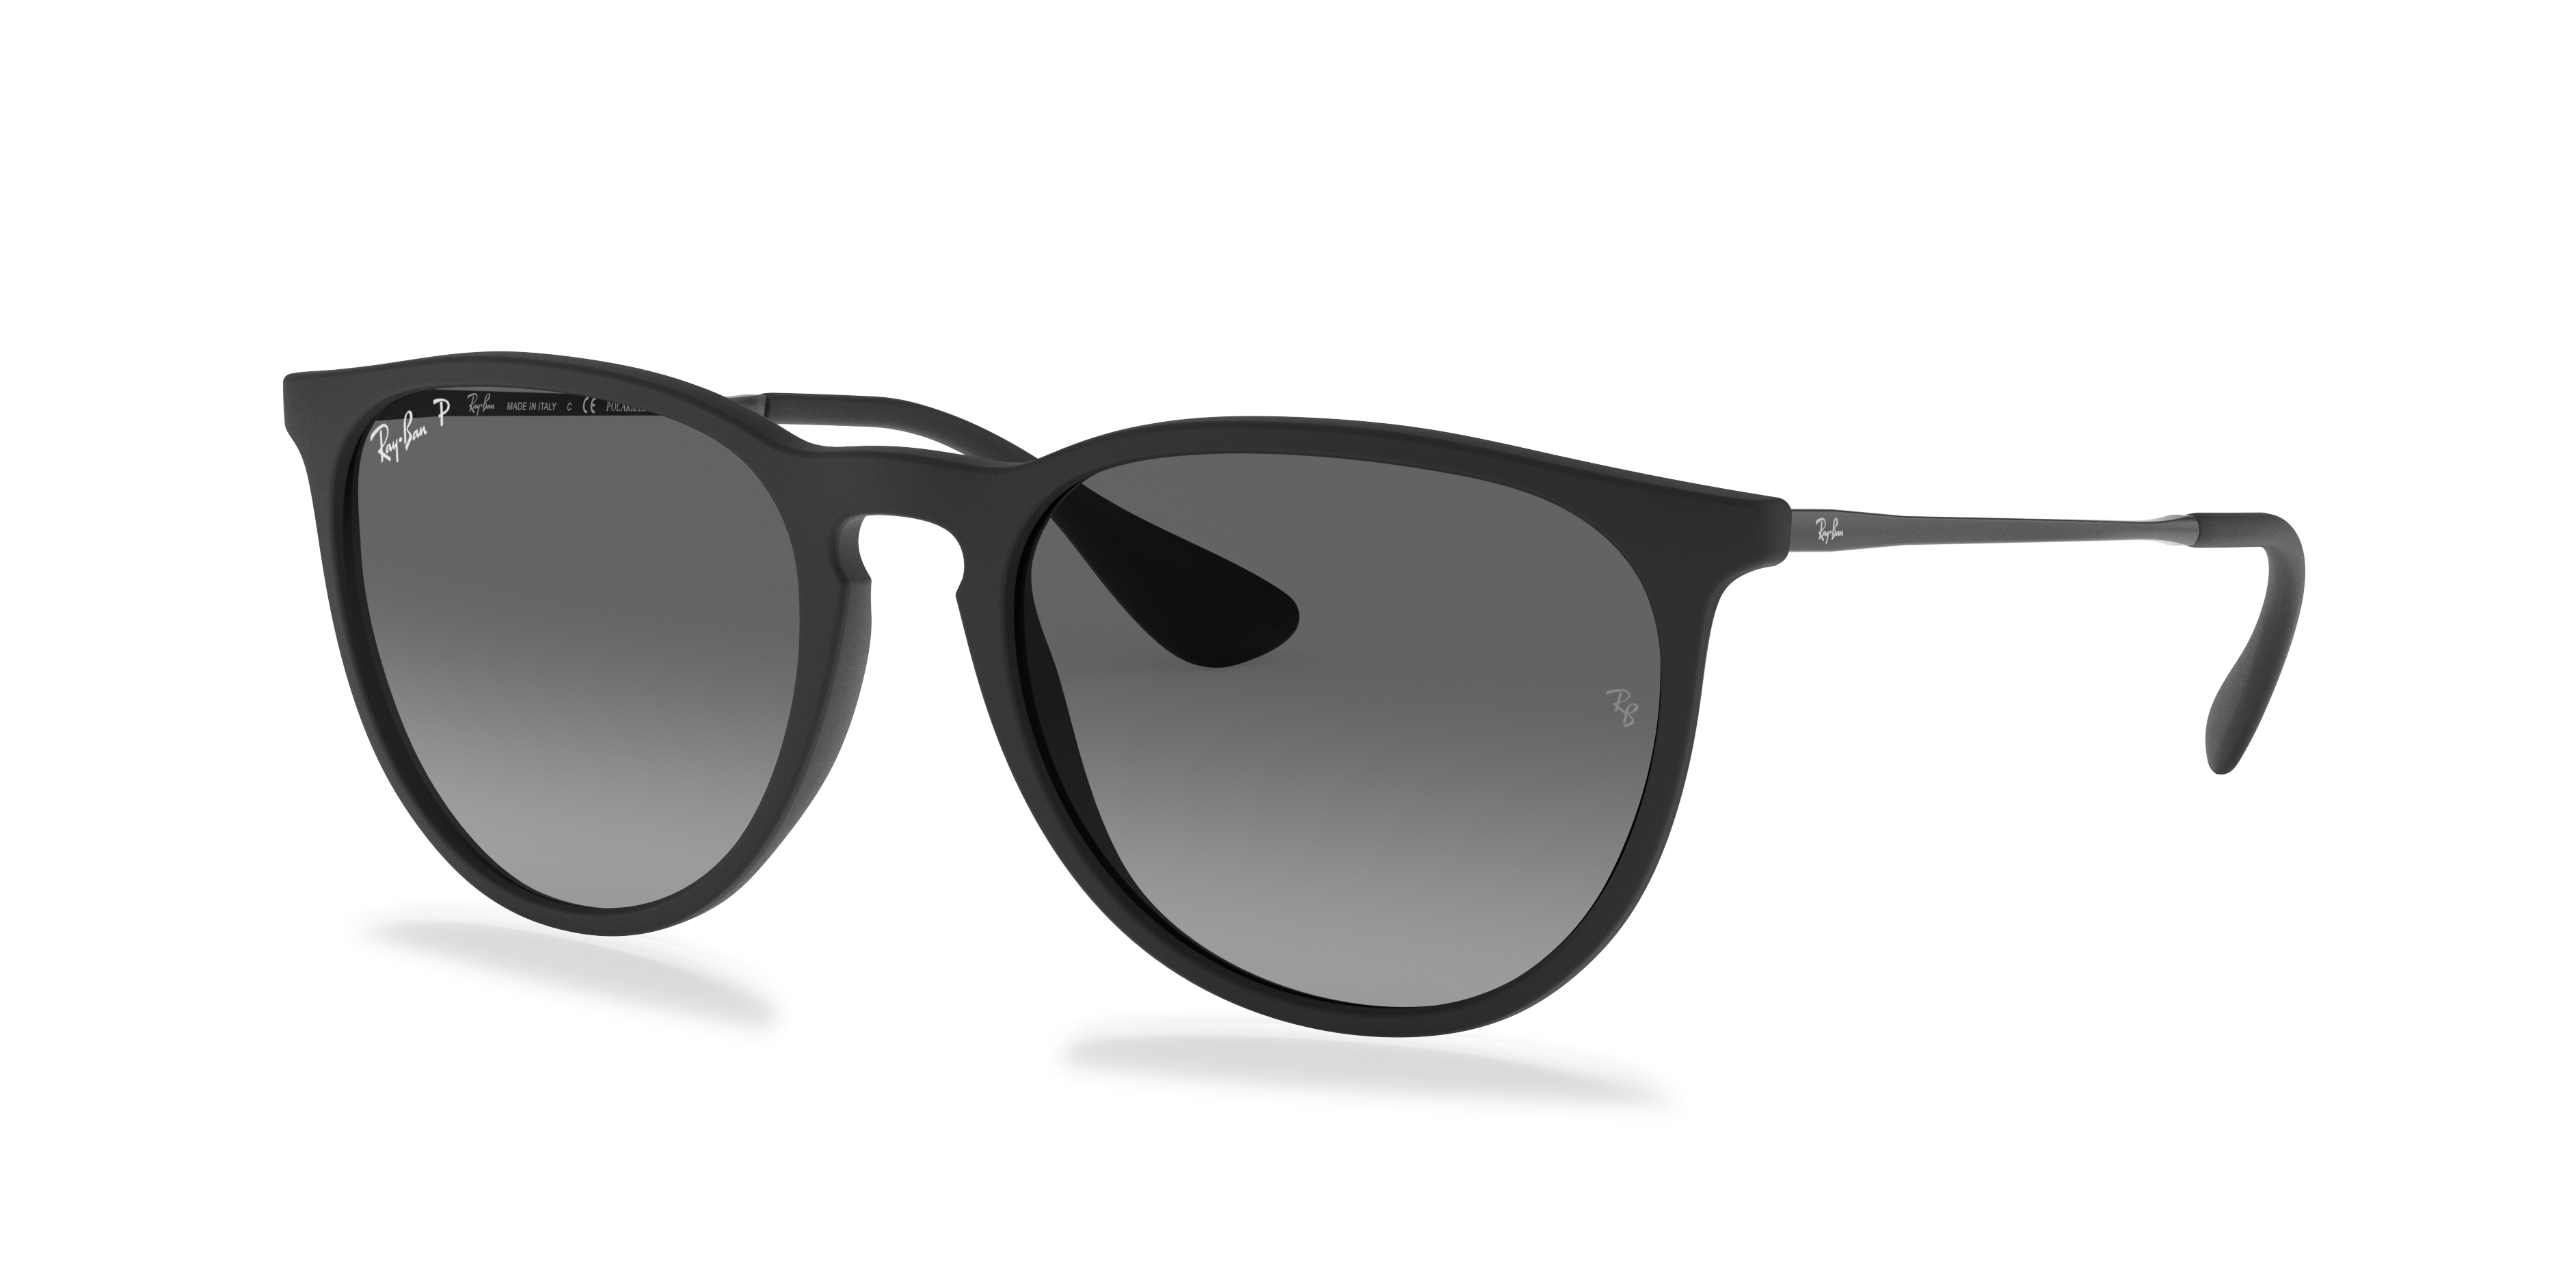 erika rb4171f polarized sunglasses